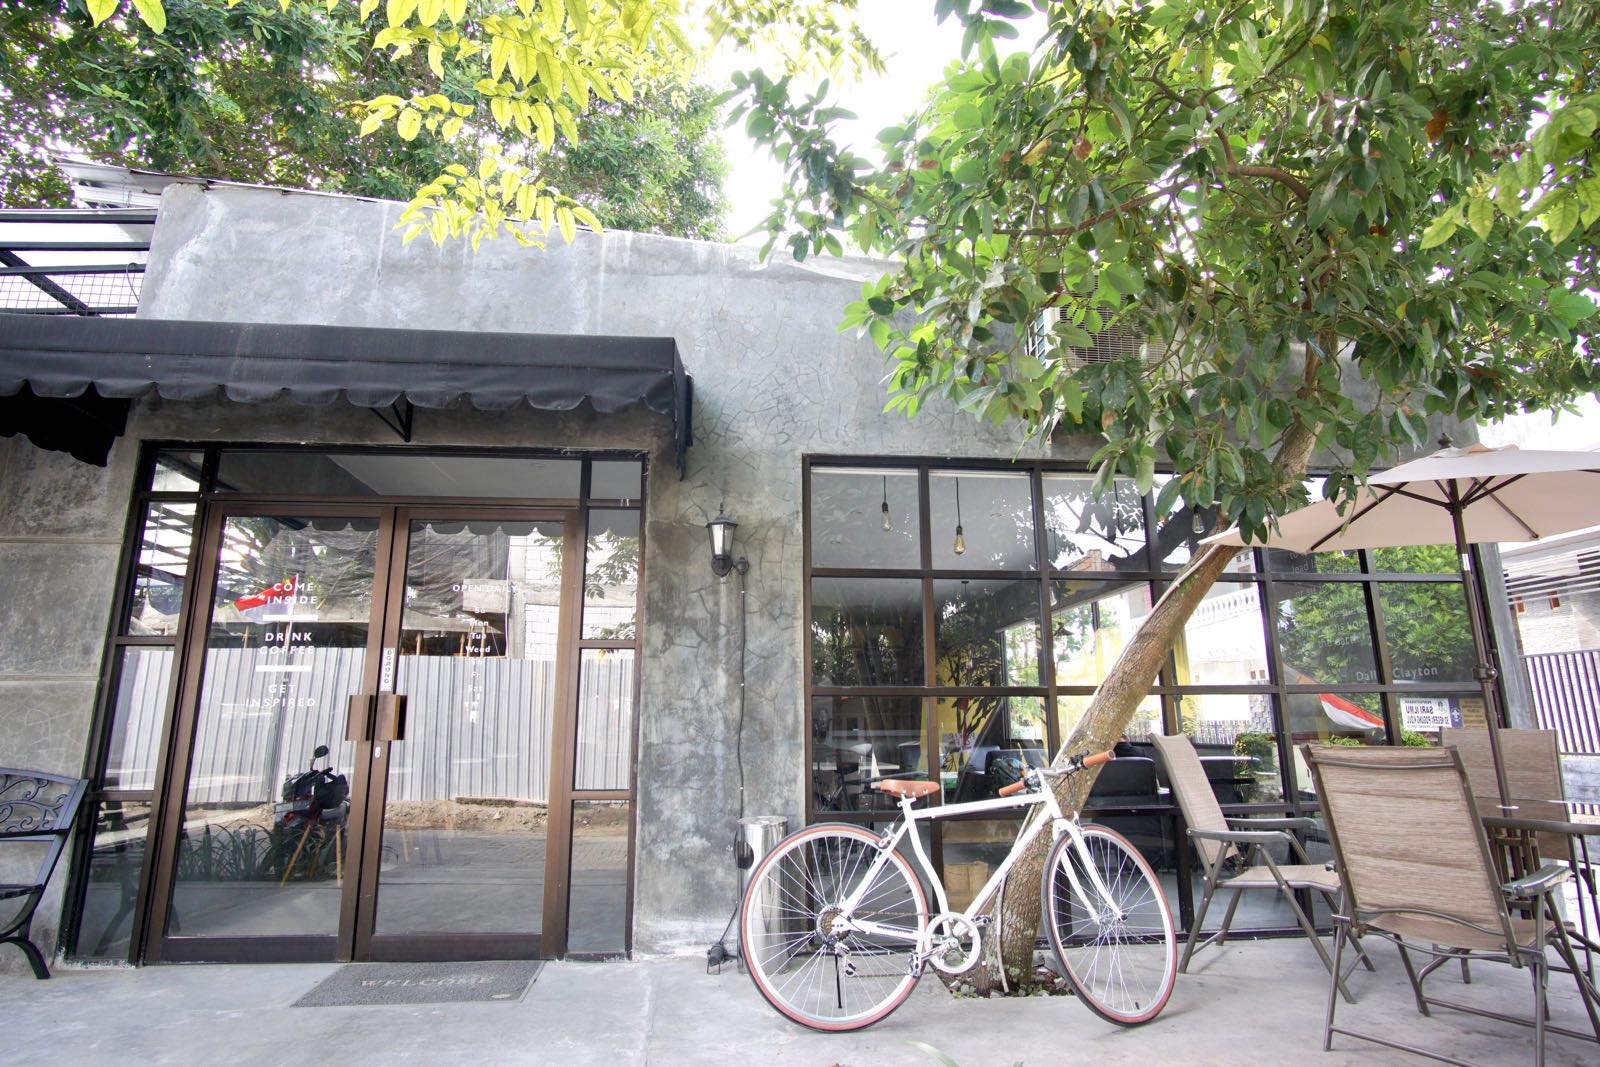 Lantai Bumi Coffee & Space, Yogyakarta: Nongkrong Asik Leluasa - PergiDulu.com